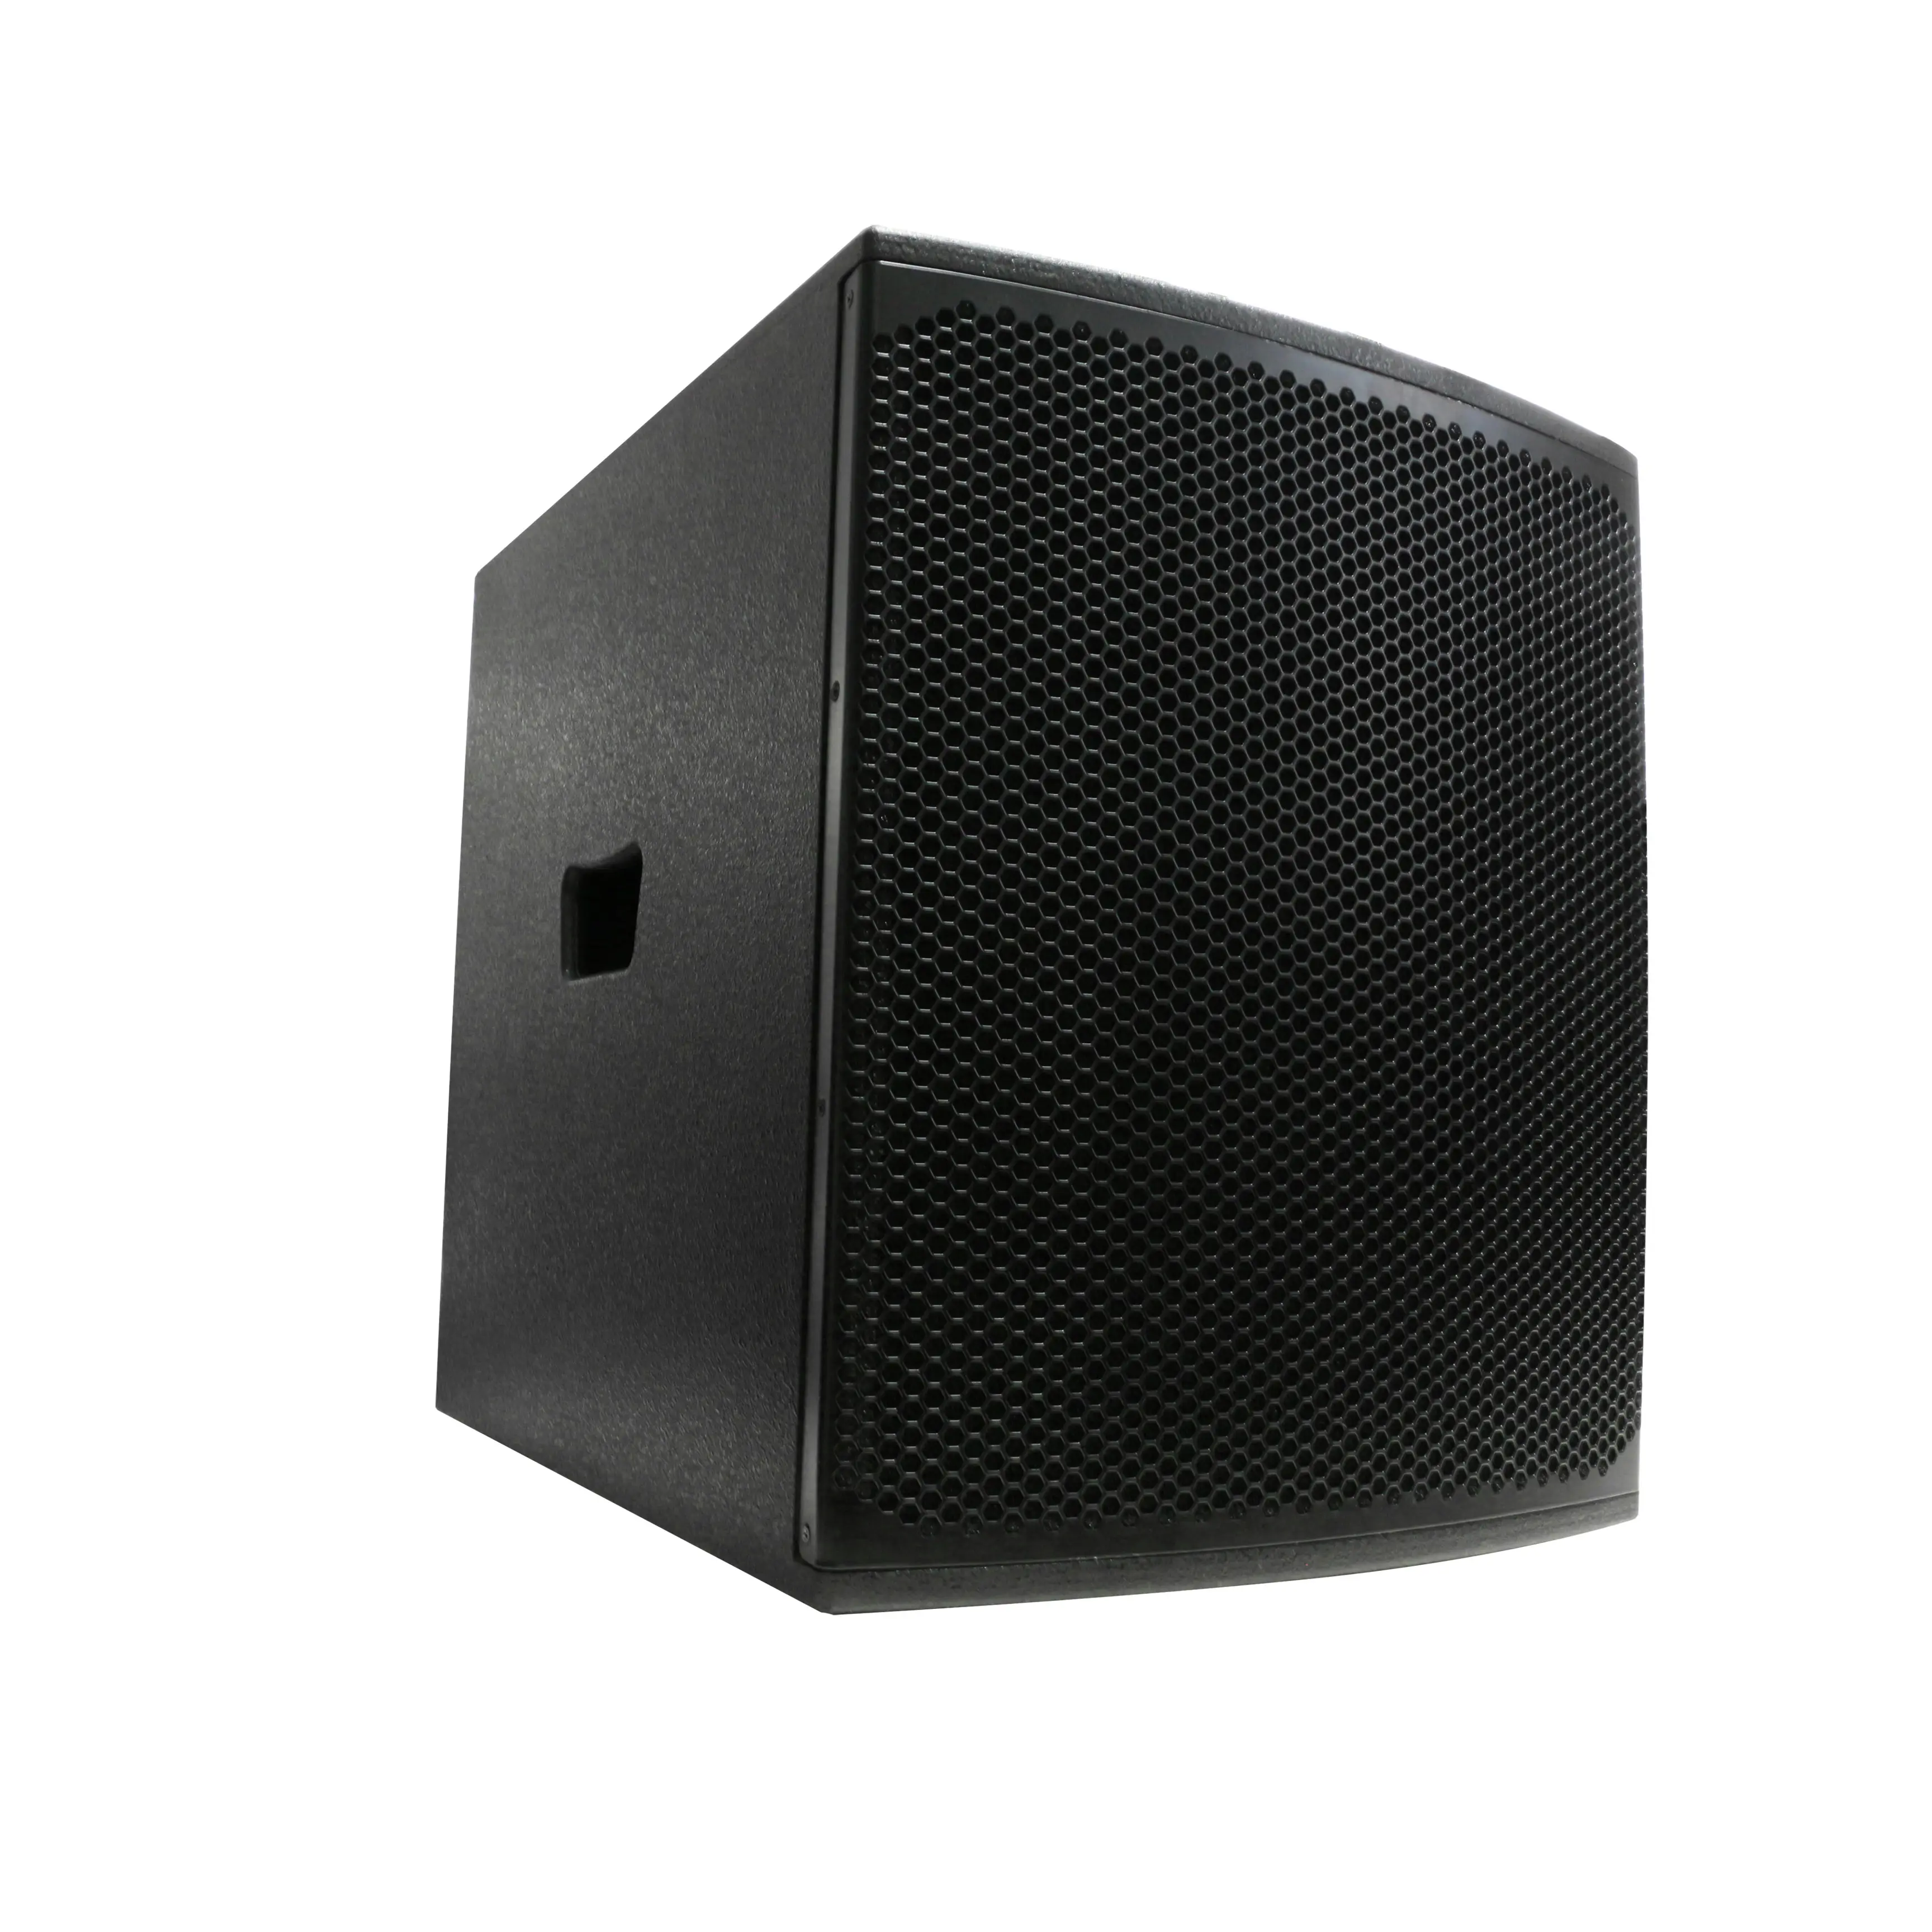 2022 Active Speaker Professional Portable Subwoofer Speaker Best dj speakers 18 inch subwoofer